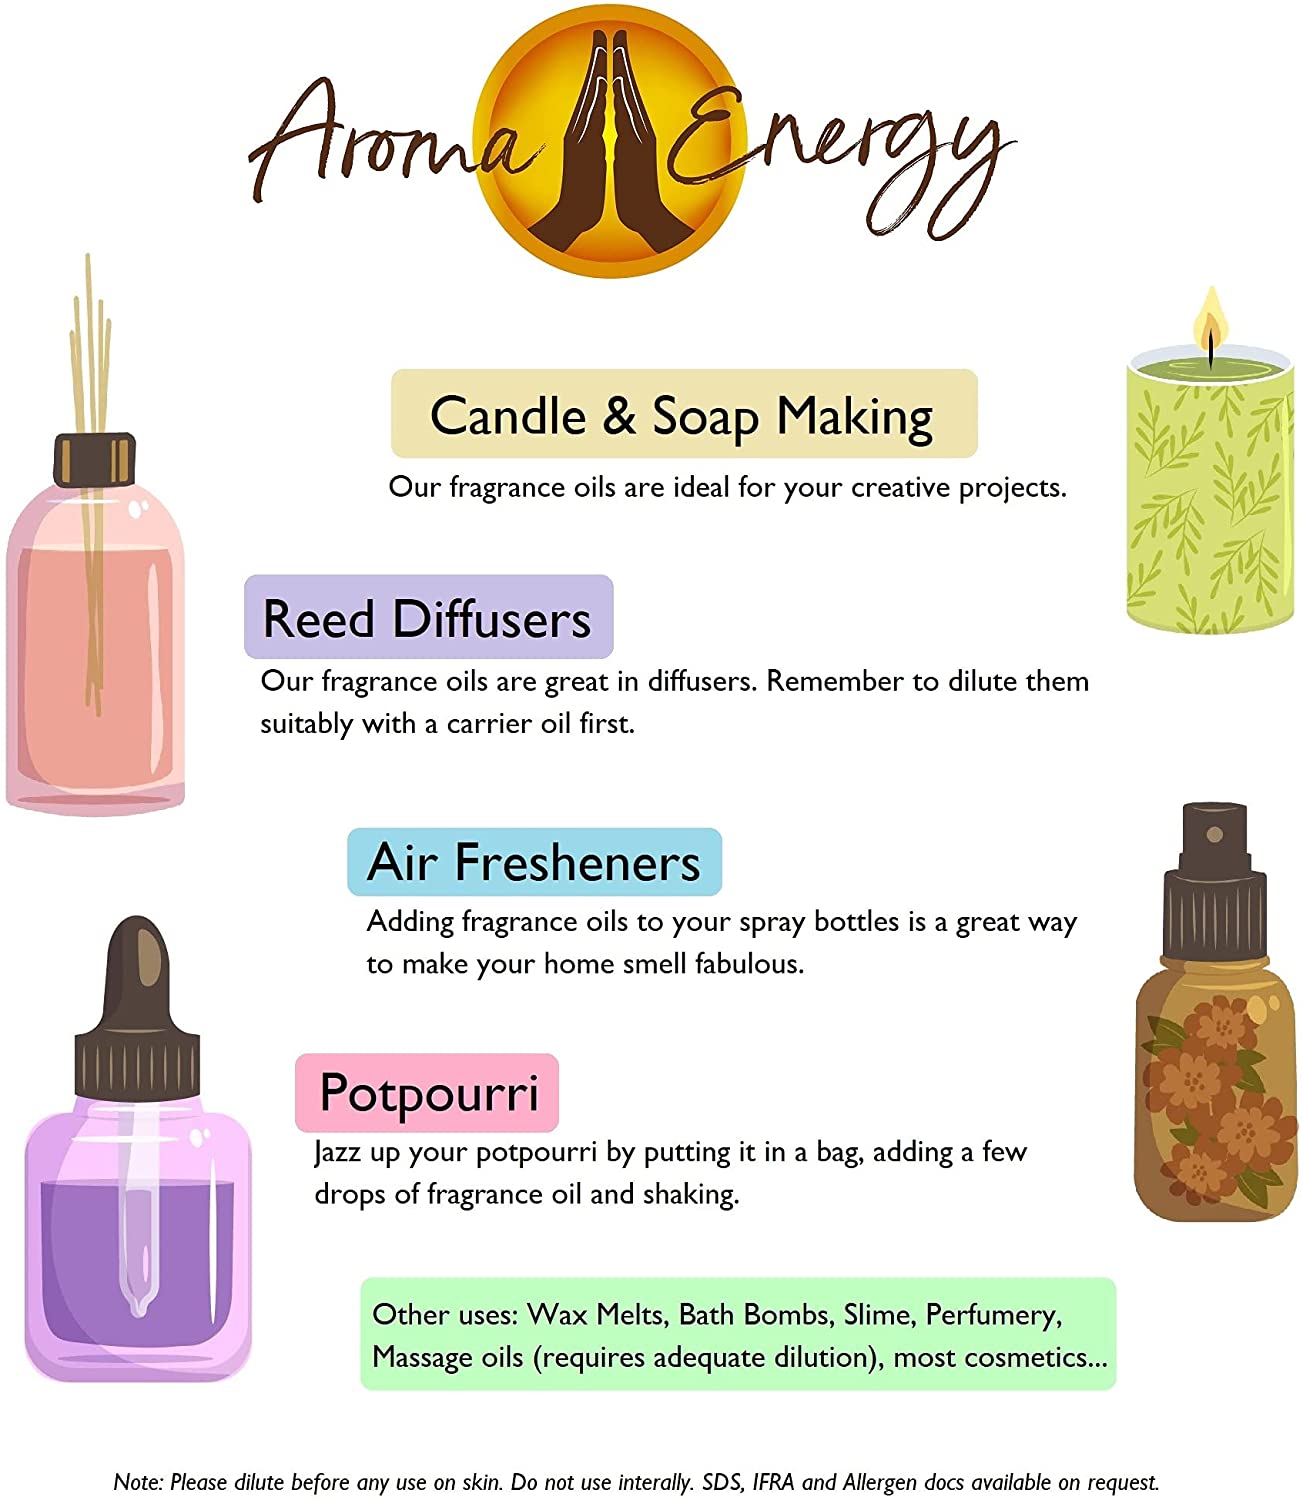 Cinnamon & Apple Fragrance Oil - Aroma Energy